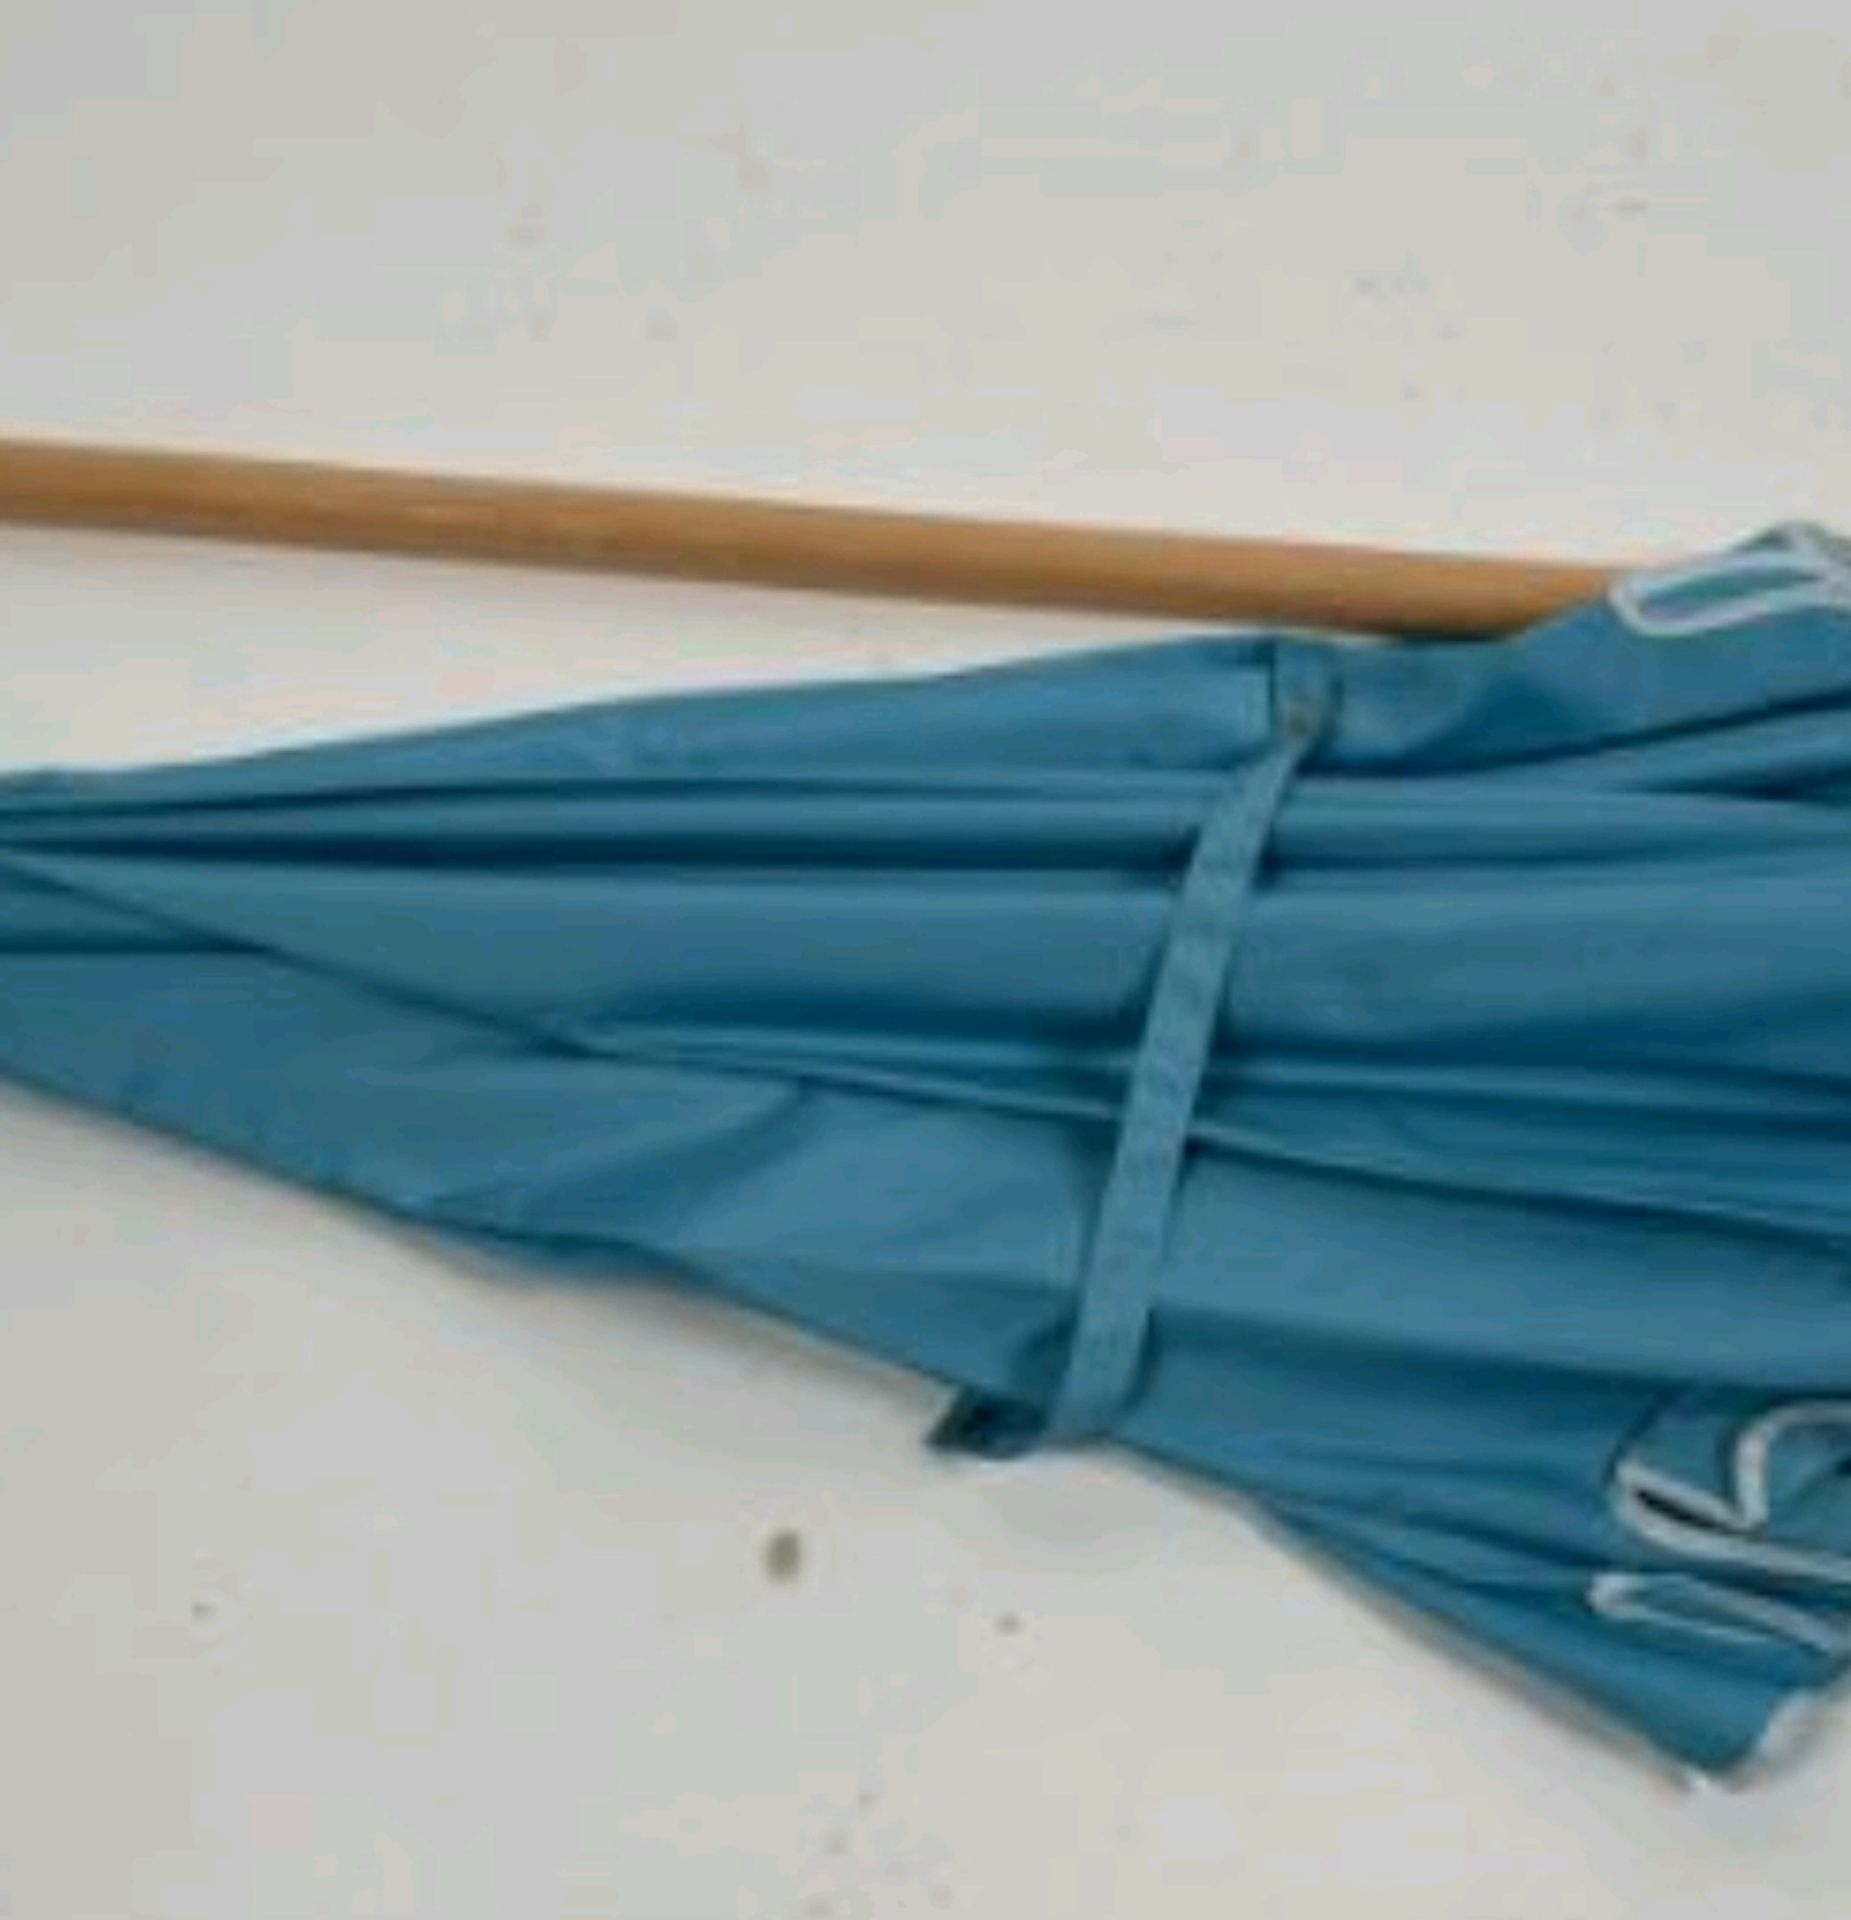 Sunny Life Beach Umbrella Blue Colour - Image 3 of 3